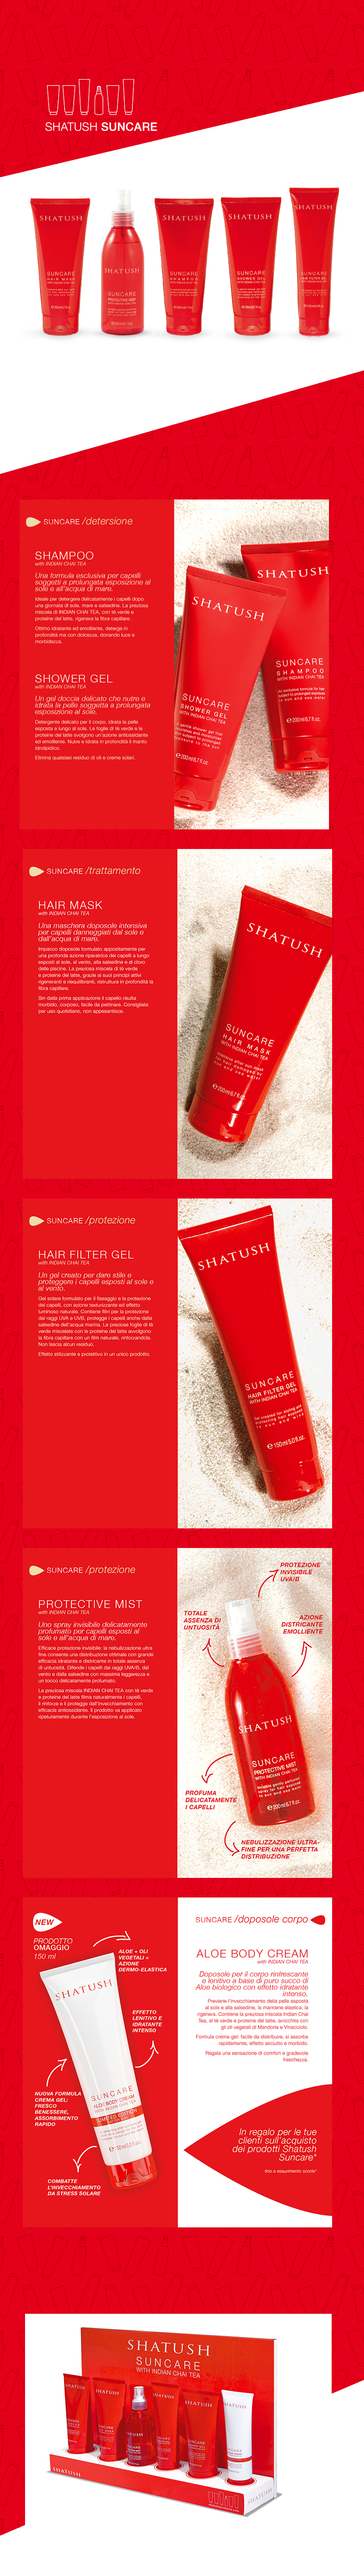 shatush Sun care summer Hair Care hair design hair style cosmetics red icons sands brochure